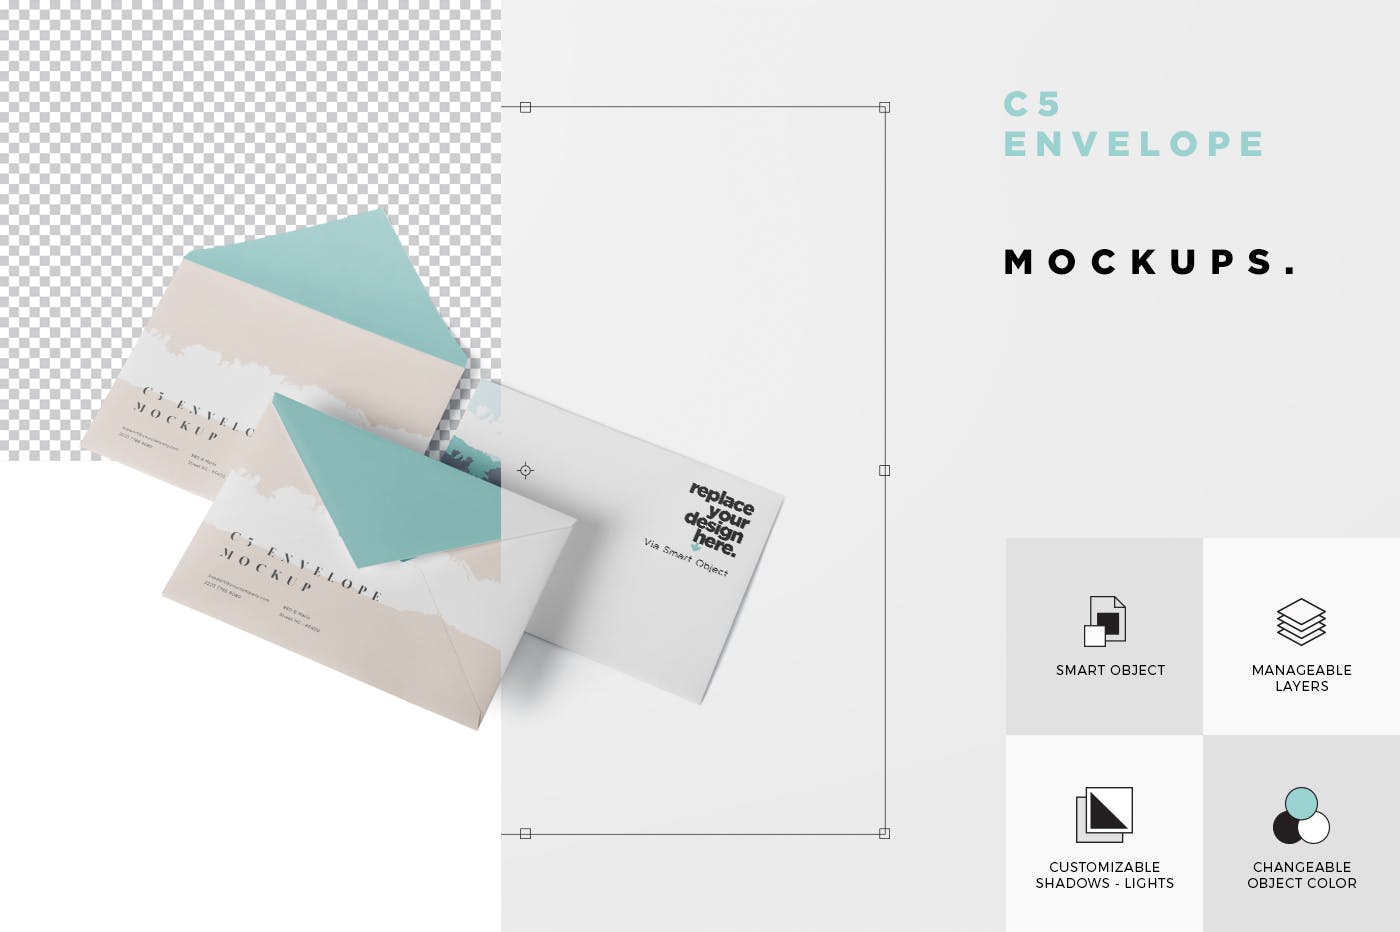 C5规格企业信封设计效果图素材库精选 Envelope C5 Mock-Up Set插图(5)